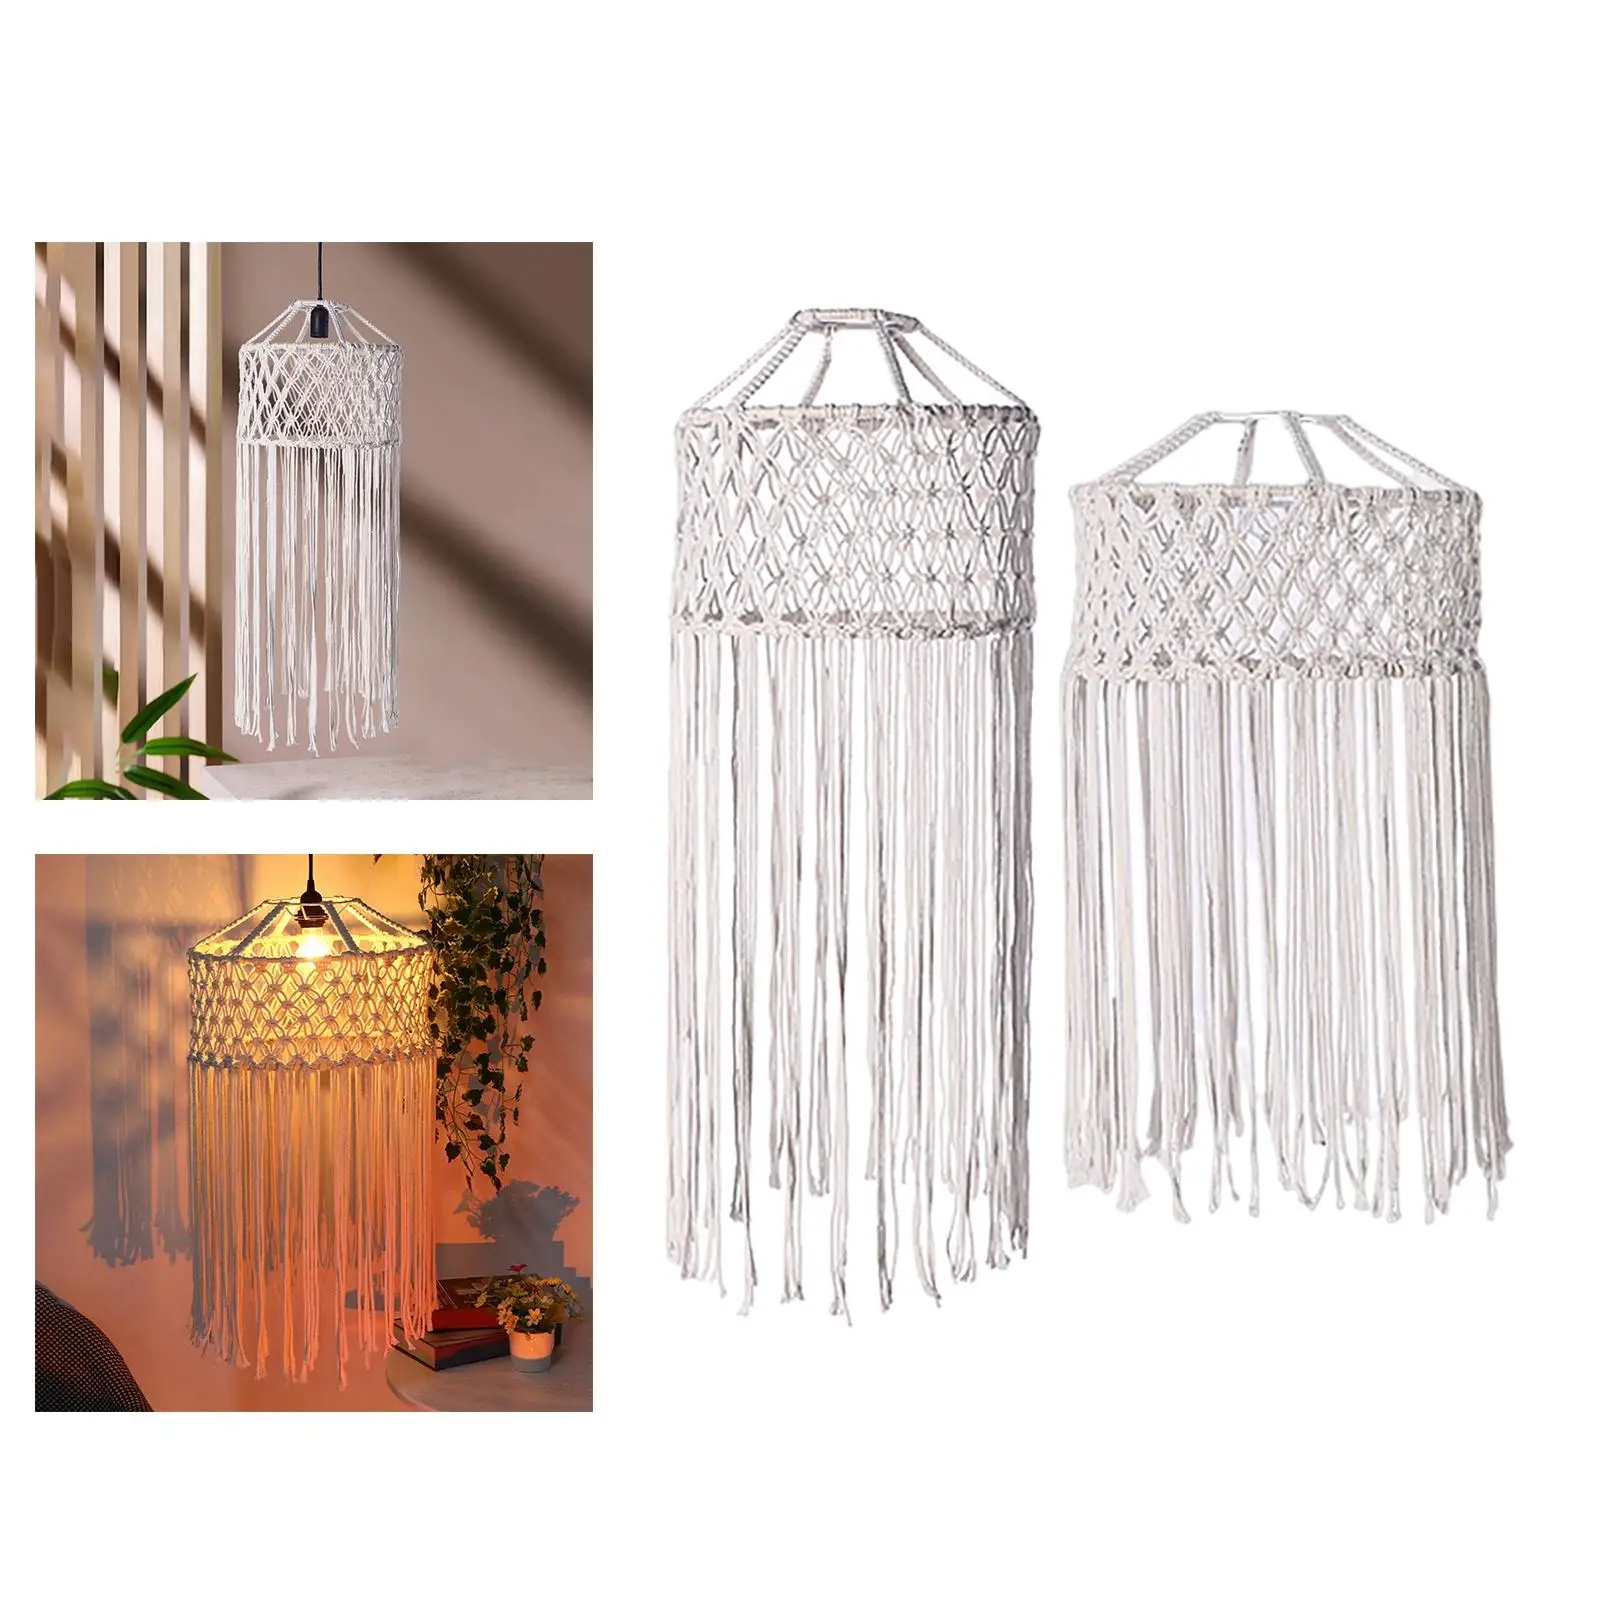 Macrame Lamp Shade Creative Woven Lampshade for Backdrop Cafe Bathroom Dorm Room